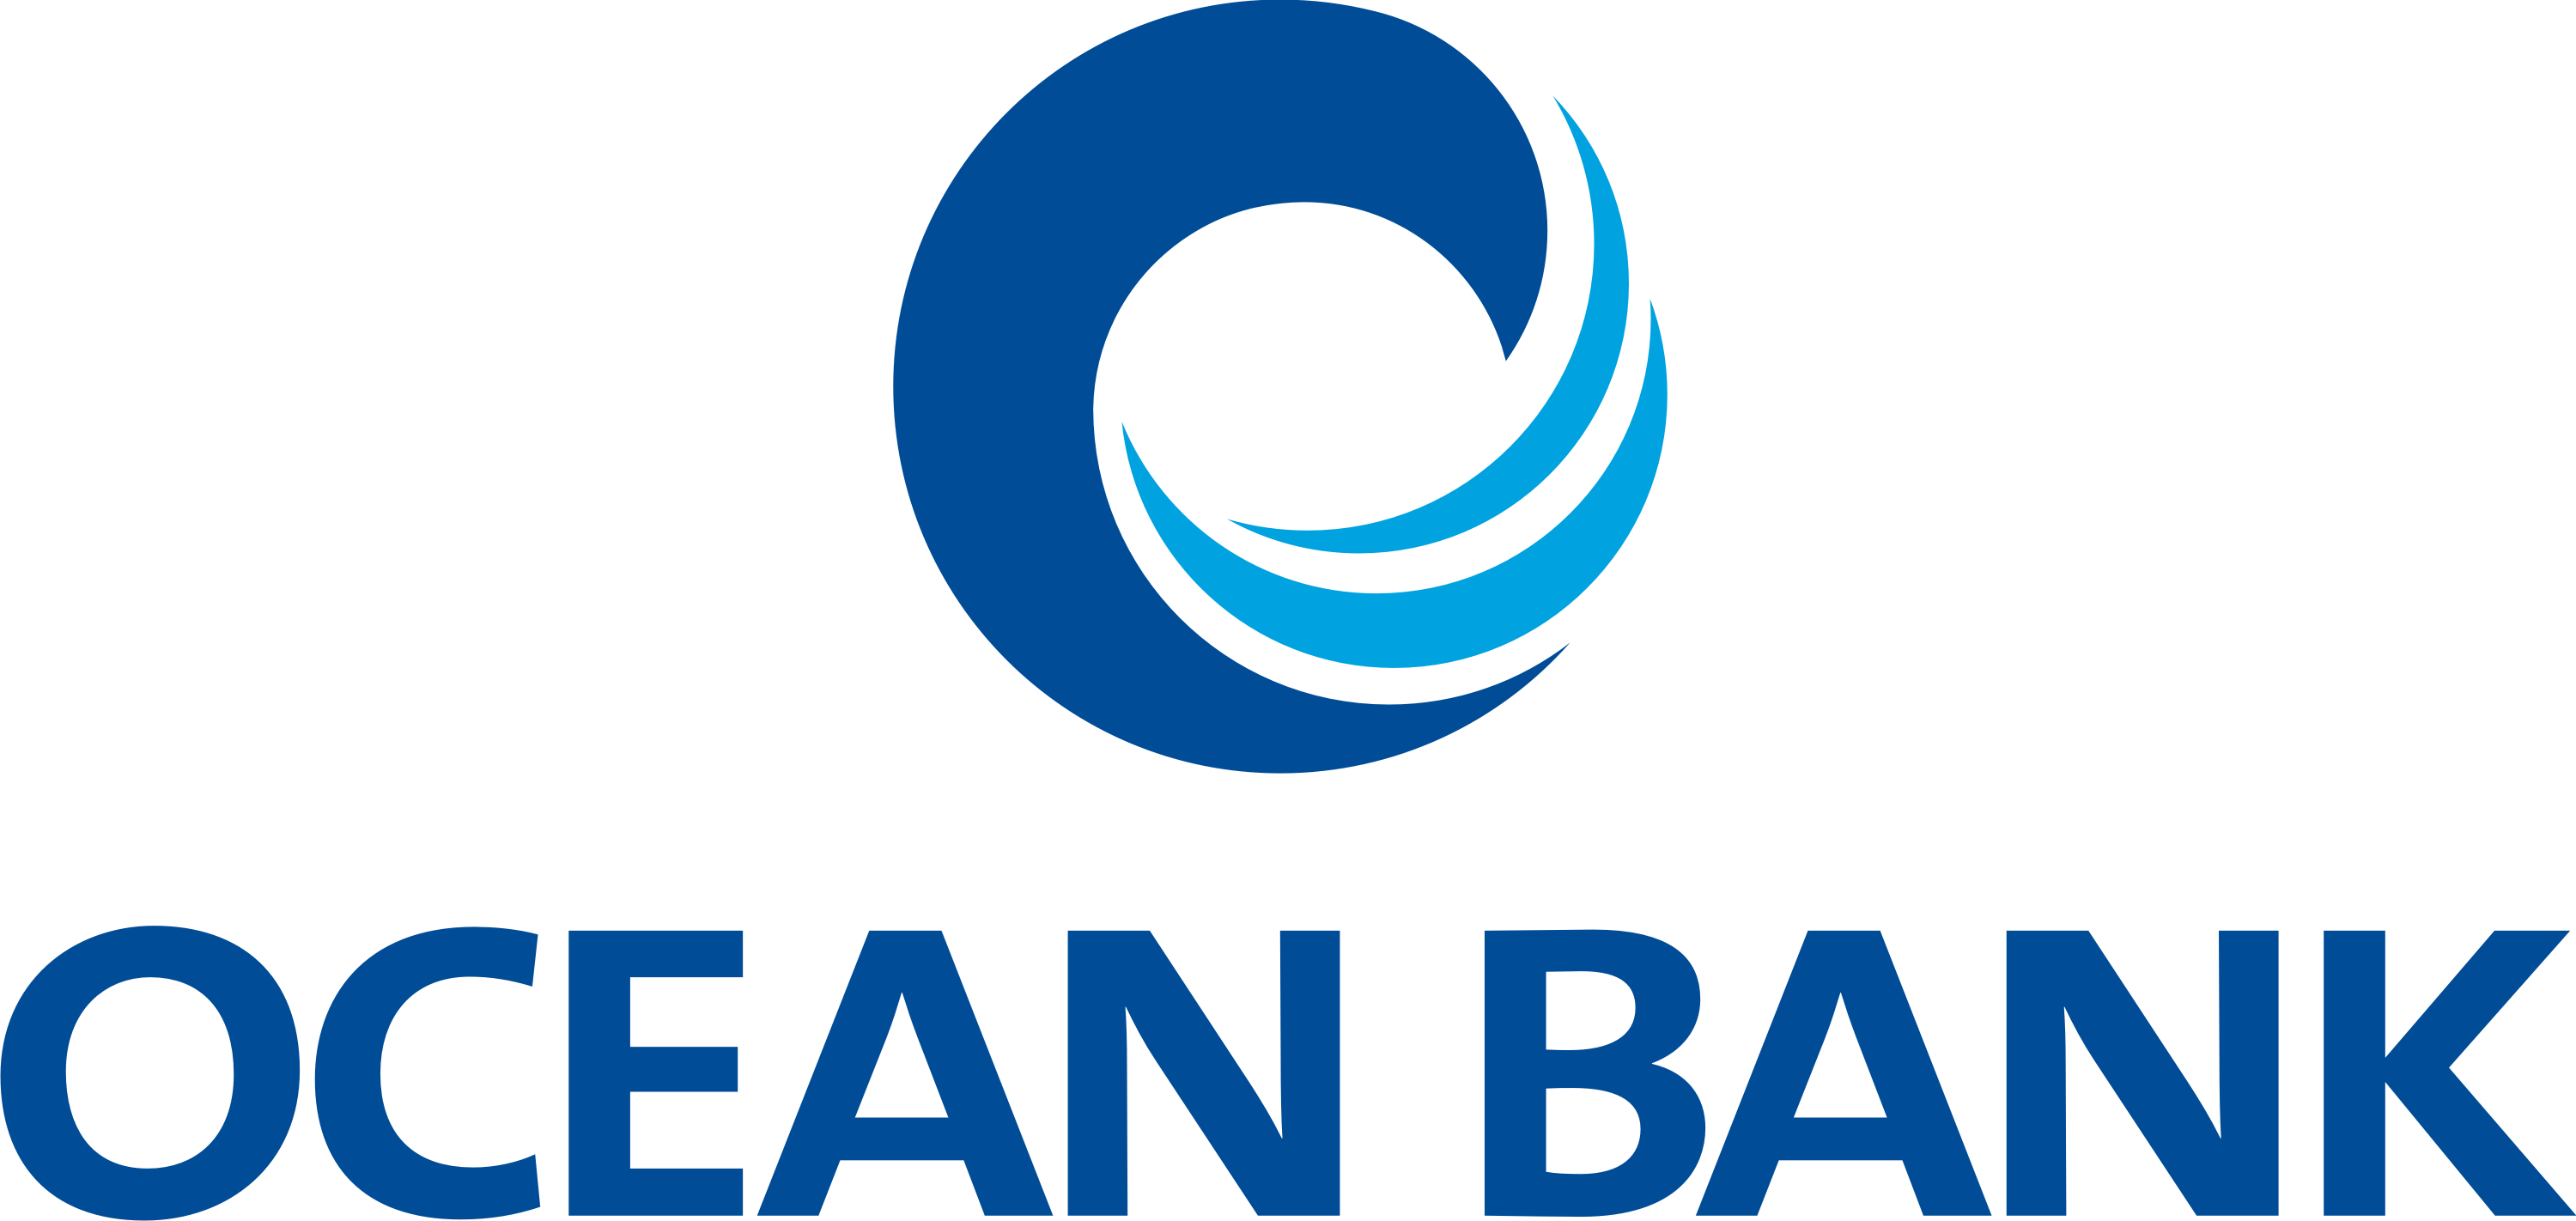 OCEAN BANK RECEIVES 